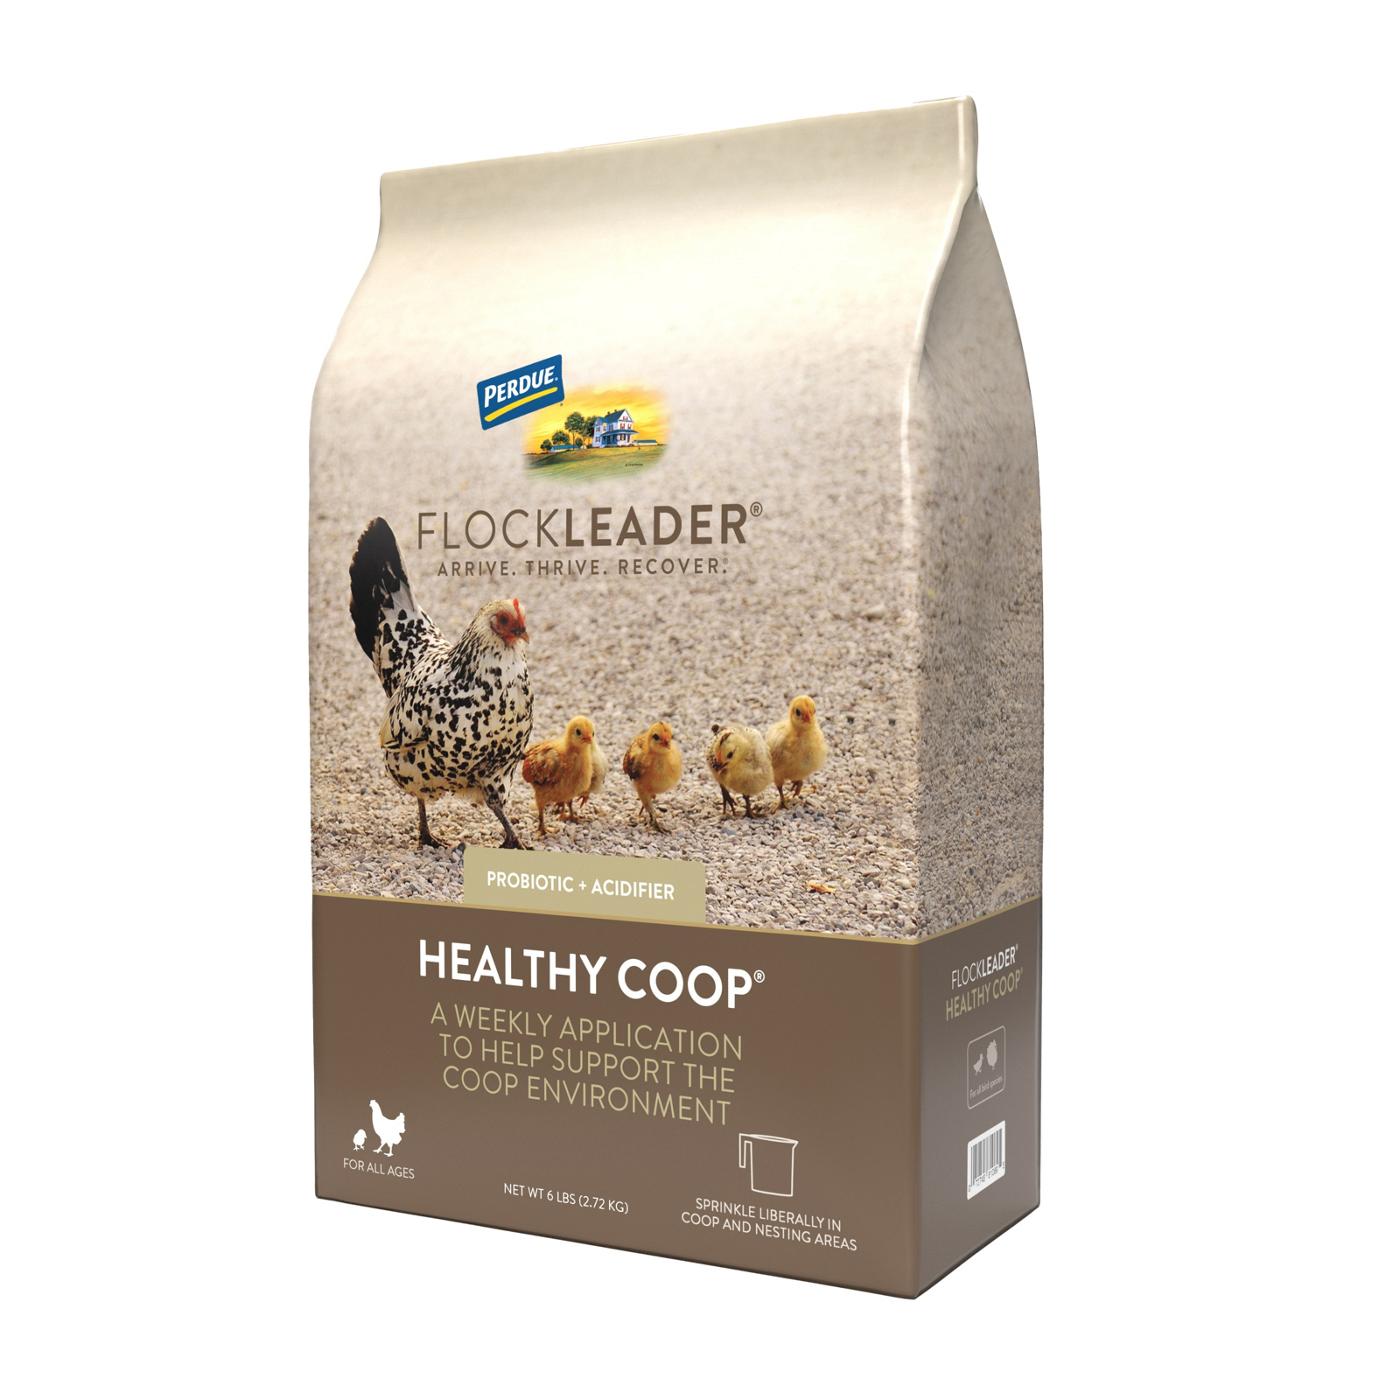 Flockleader Healthy Coop Poultry Food; image 2 of 2